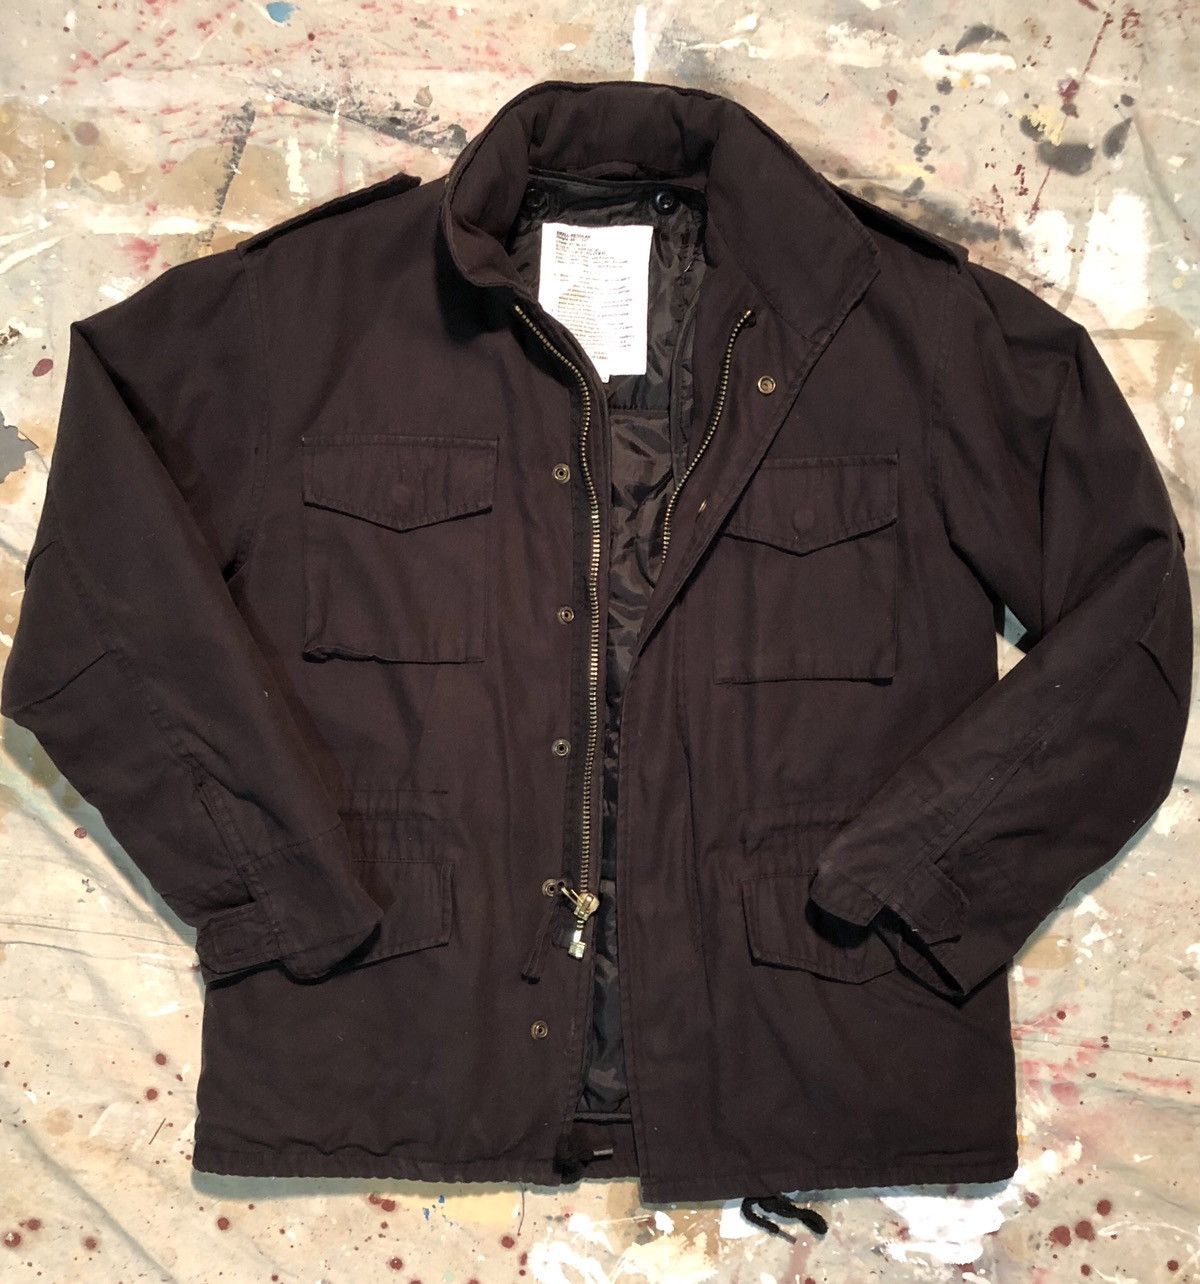 Rothco ROTHCO Noah washed black M65 field jacket | Grailed